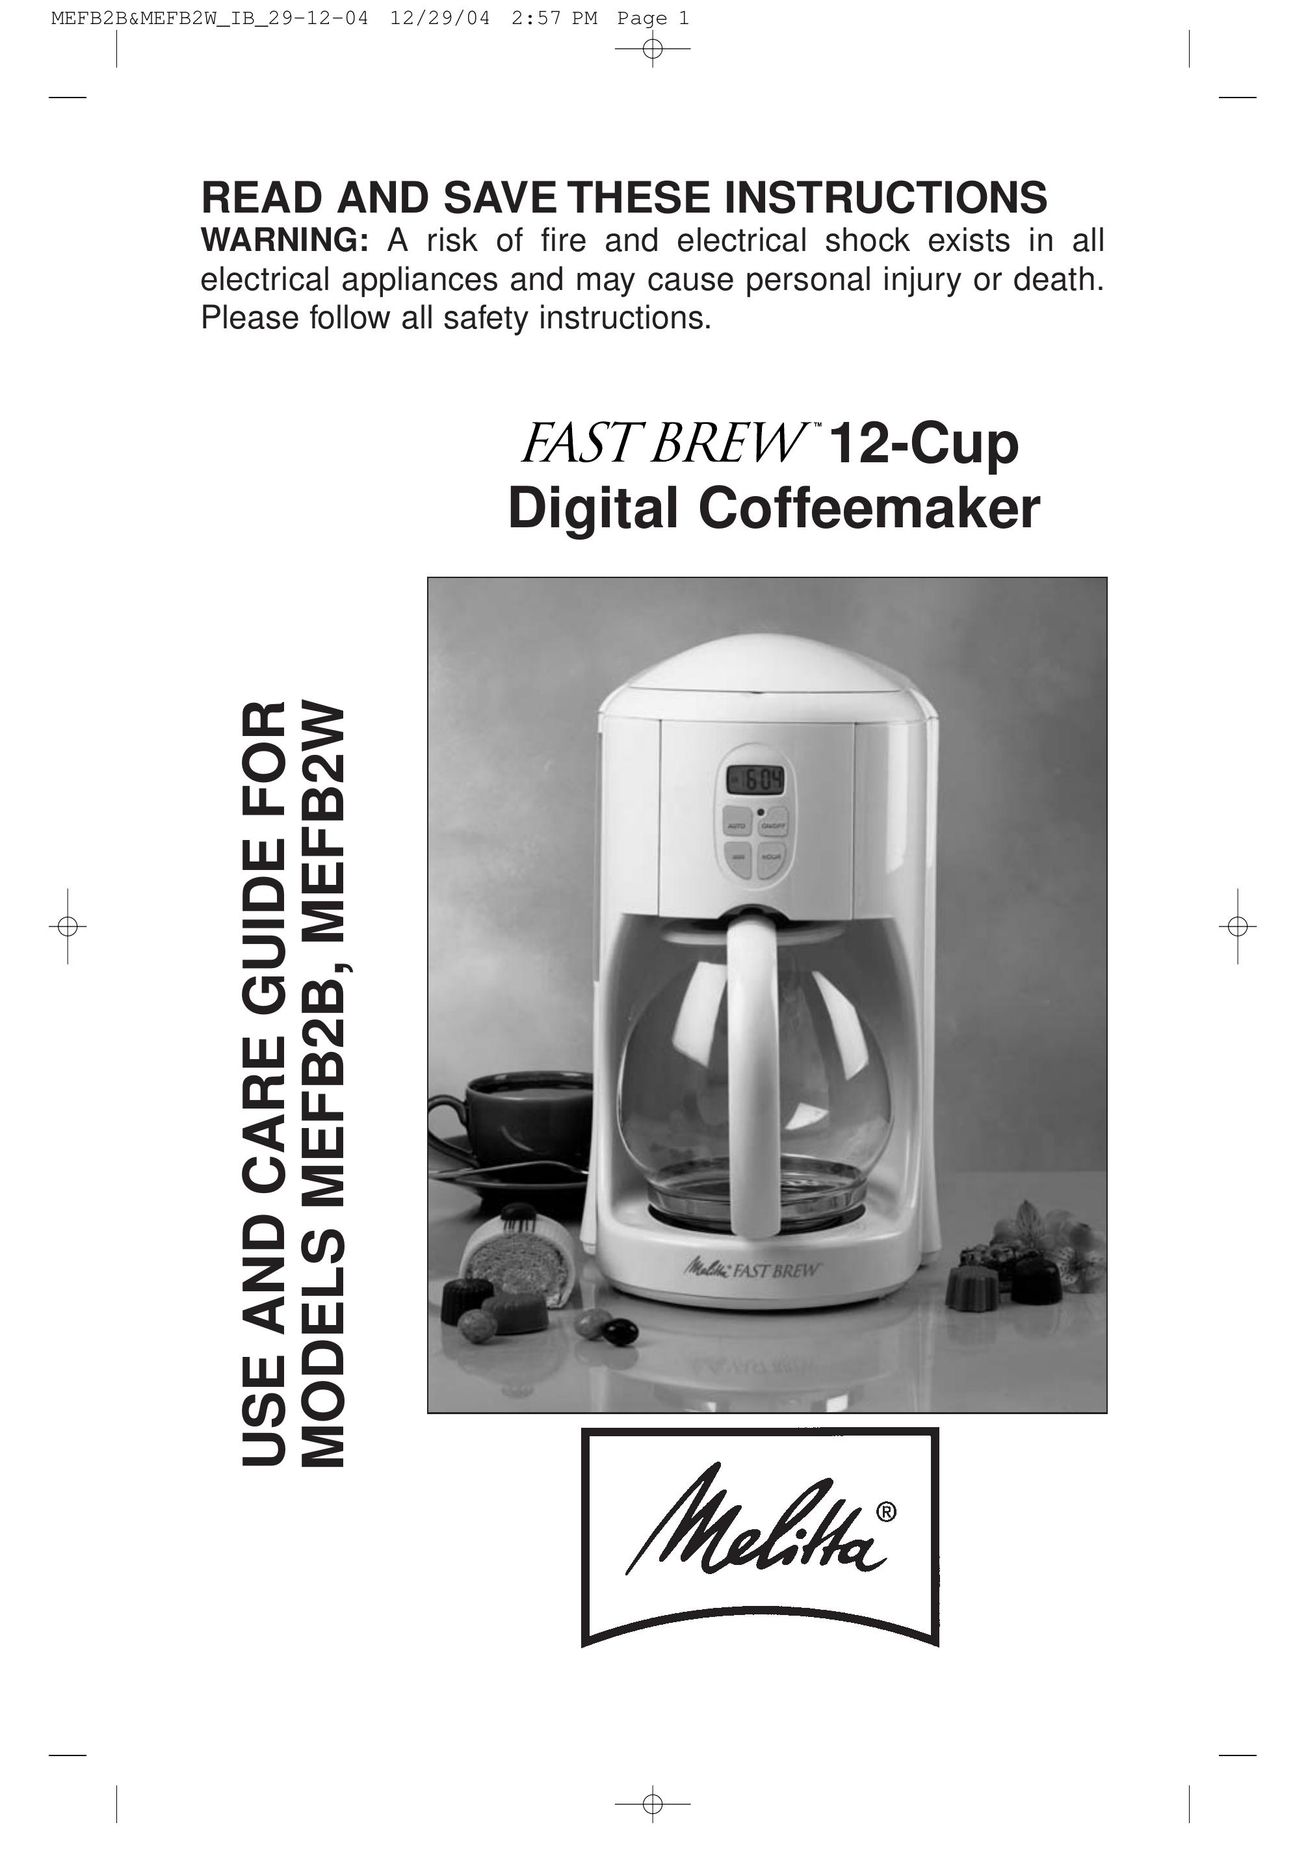 Toastmaster MEFB2B Coffeemaker User Manual